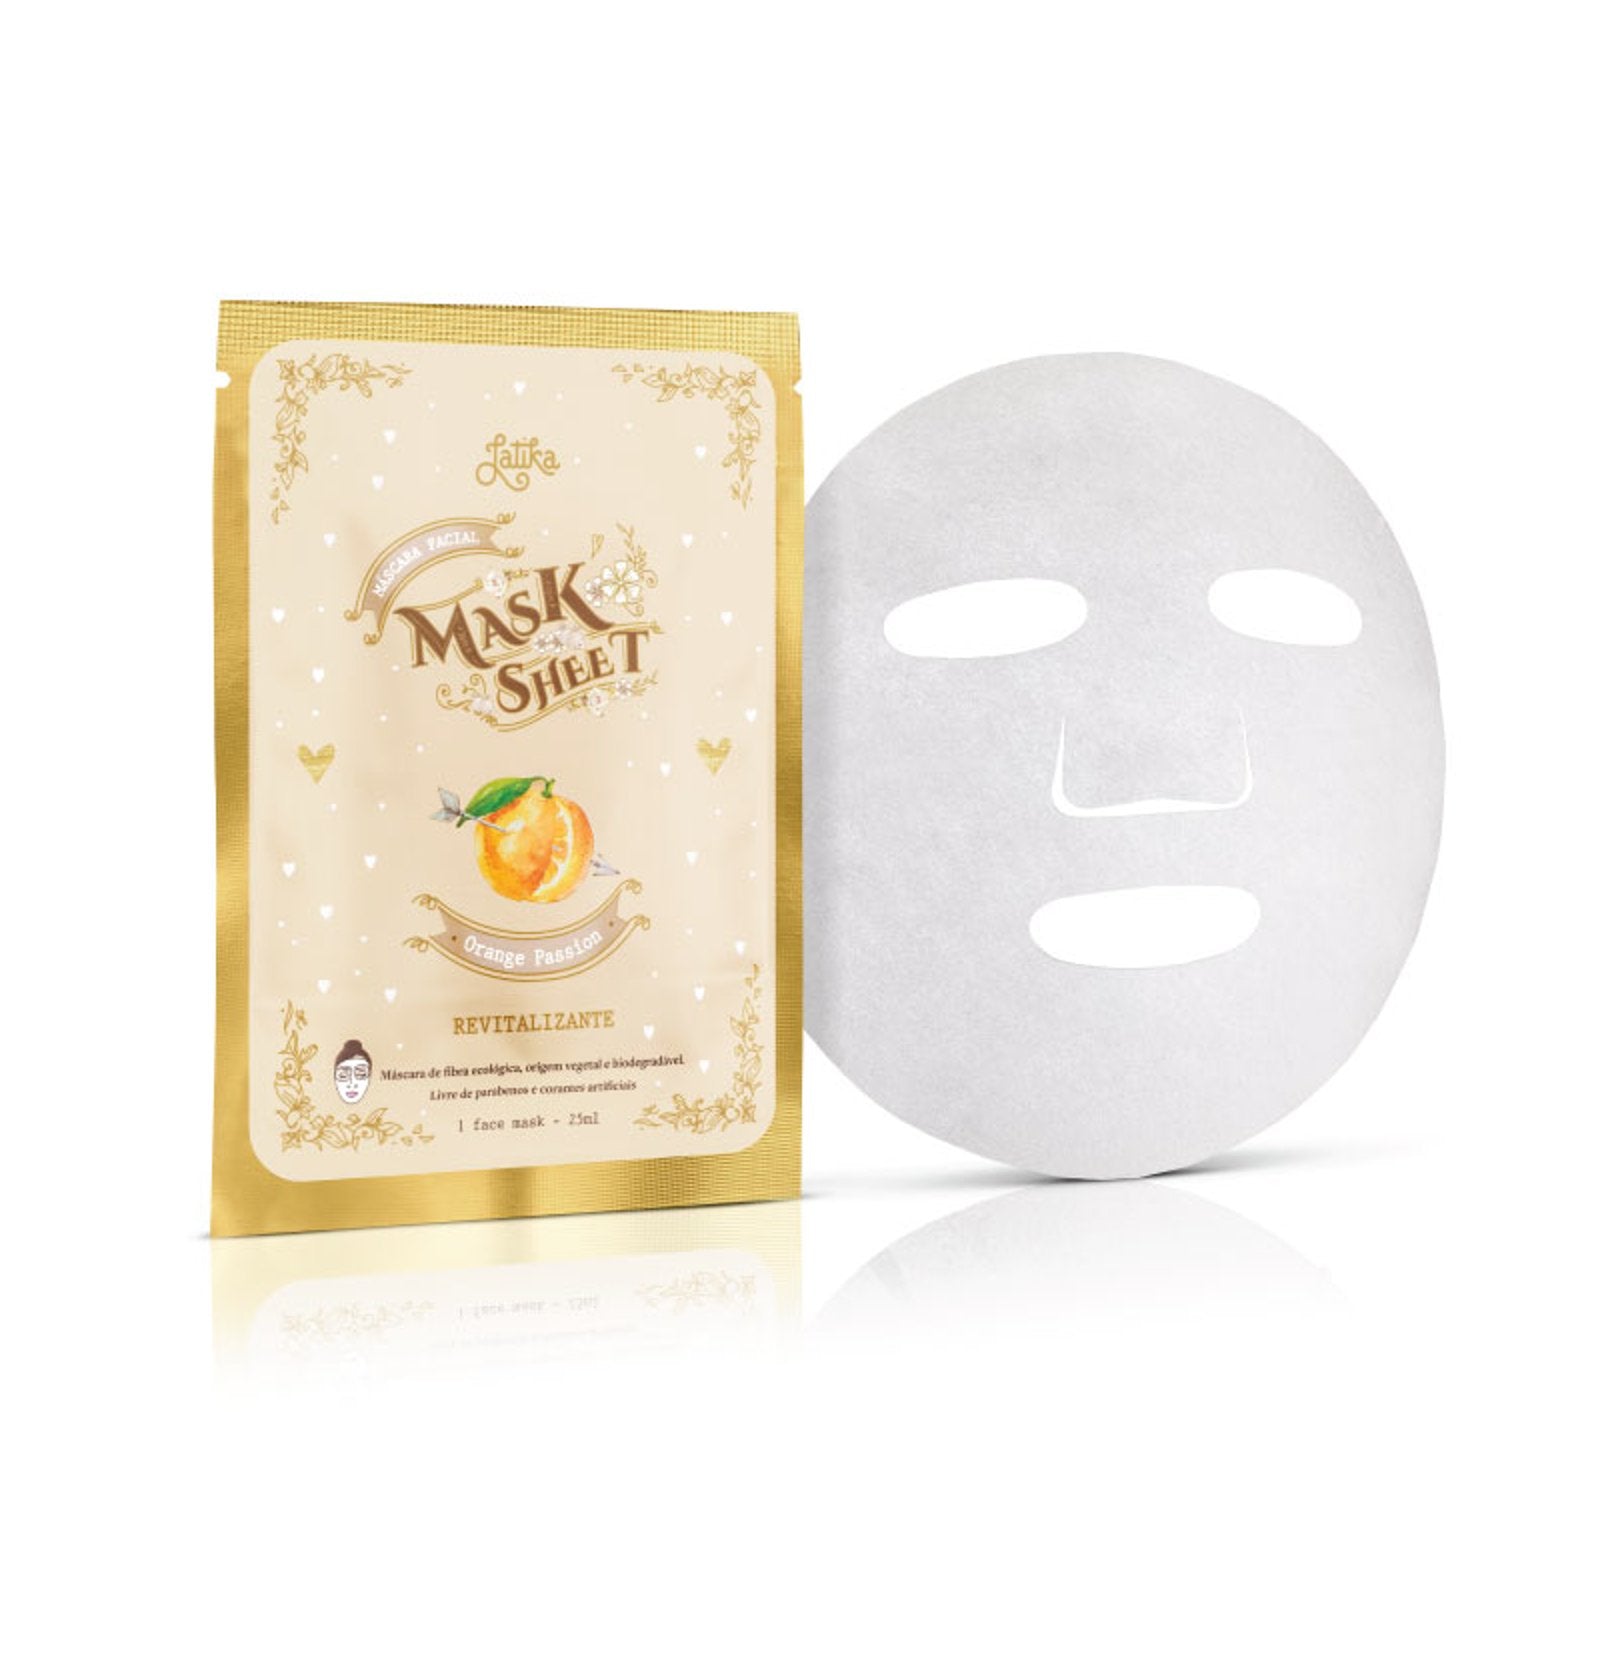 Mask Sheet Latika Orange Passion